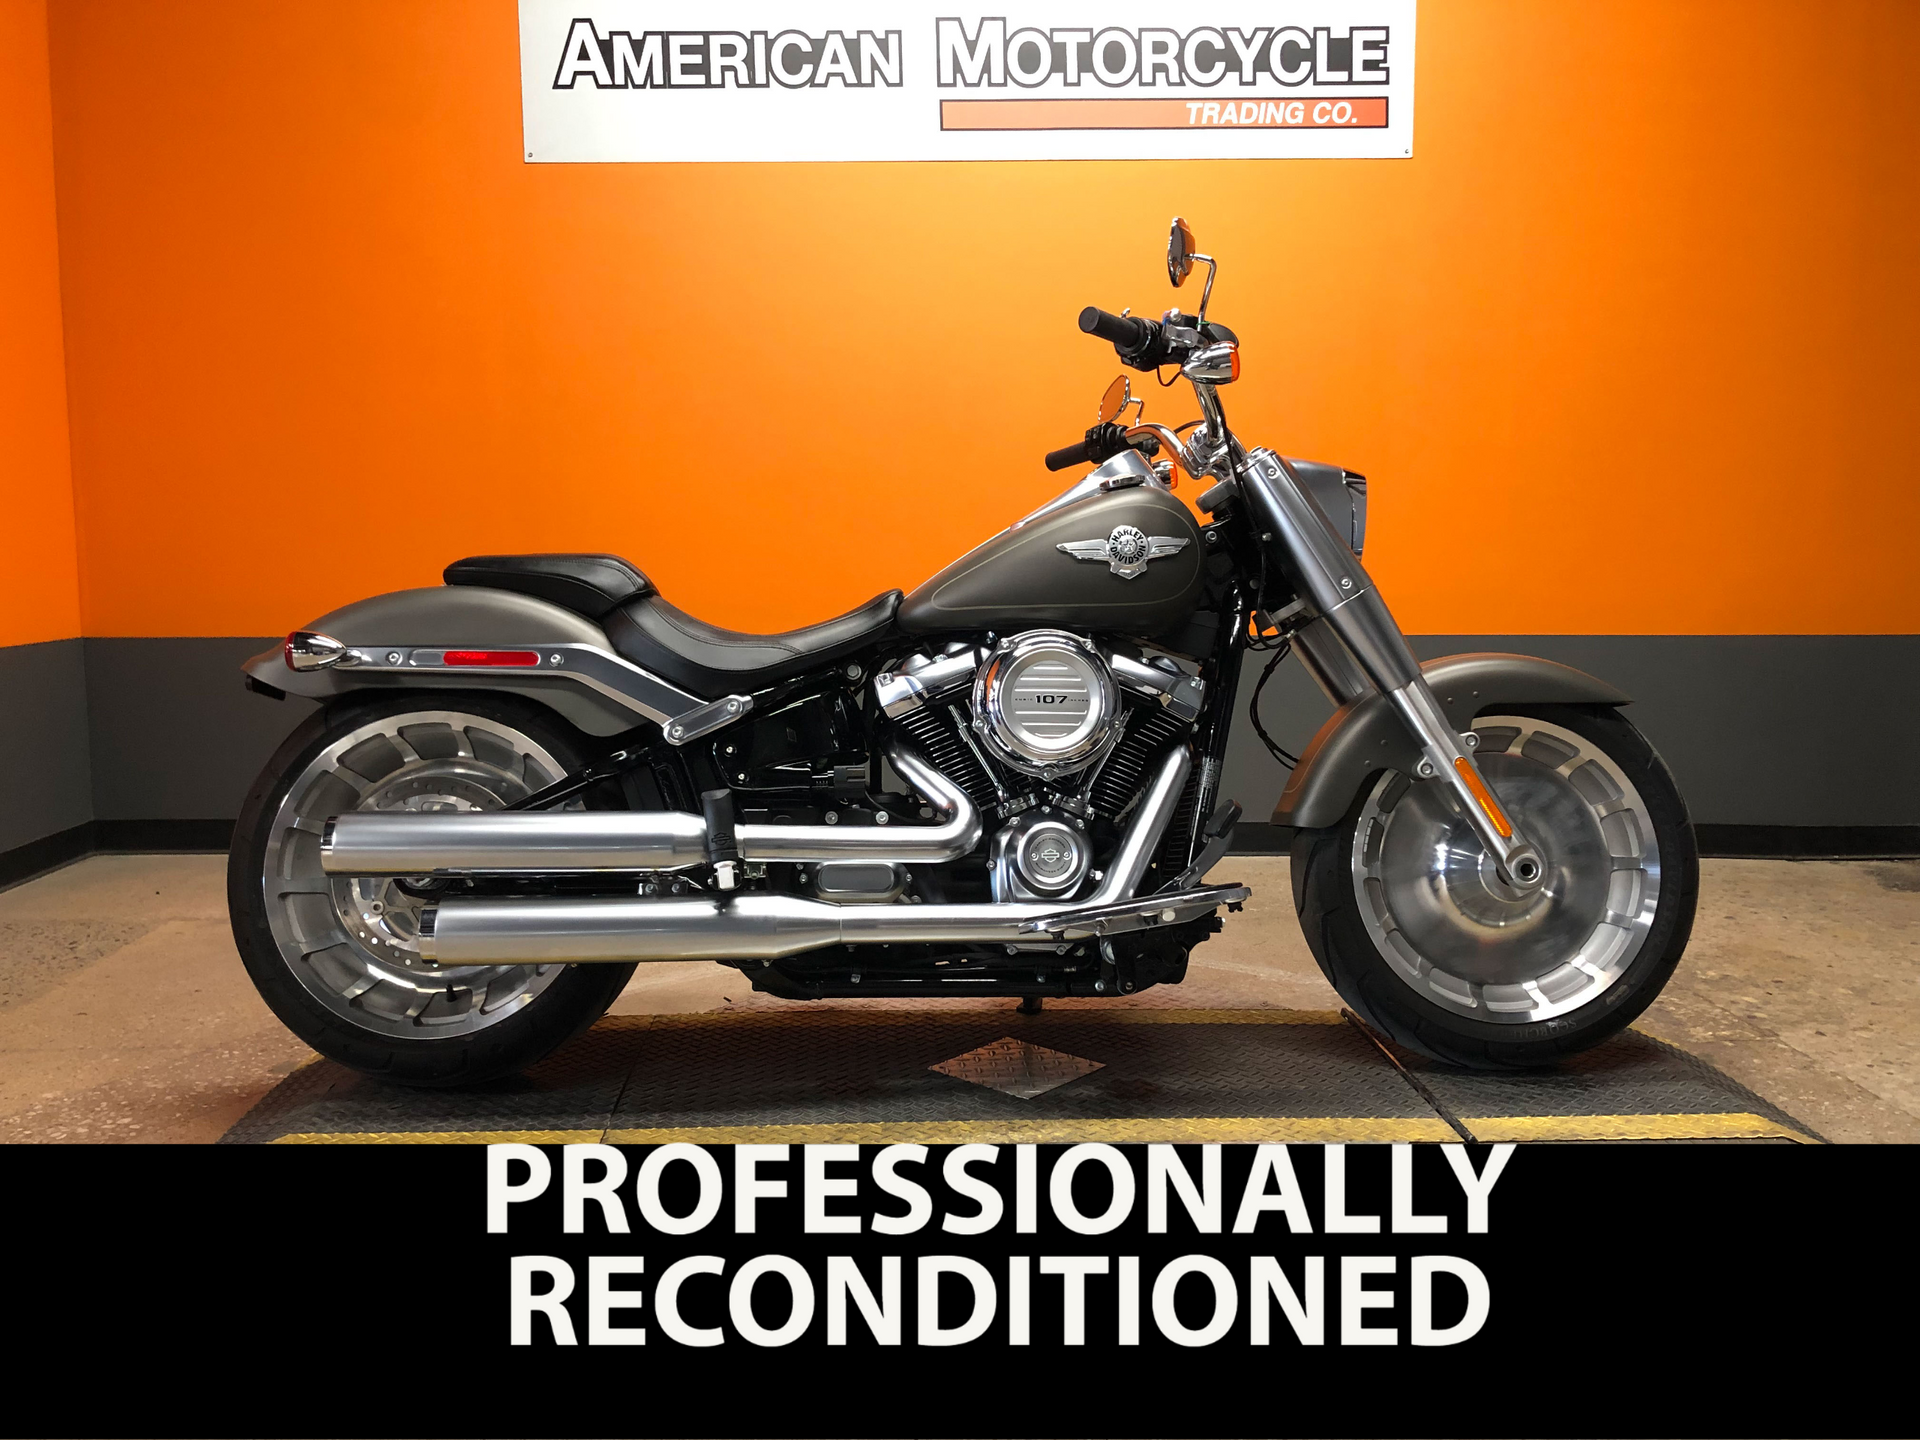 2019 Harley-Davidson Softail Fat Boy | American Motorcycle Trading Company  - Used Harley Davidson Motorcycles